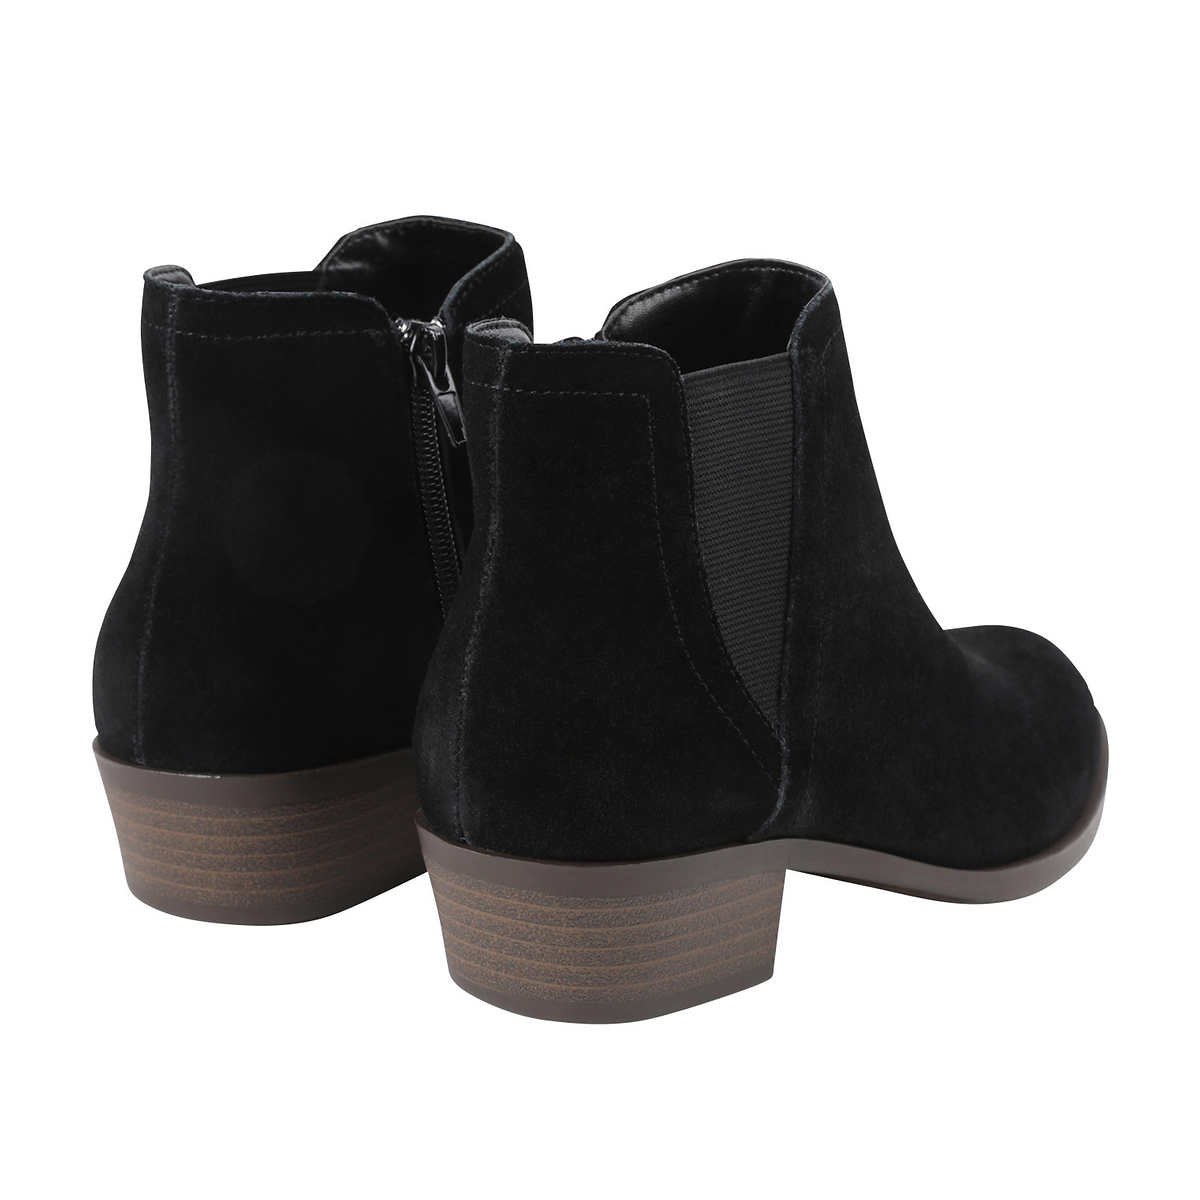 Kensie Womens Gazelle Boots Black | eBay